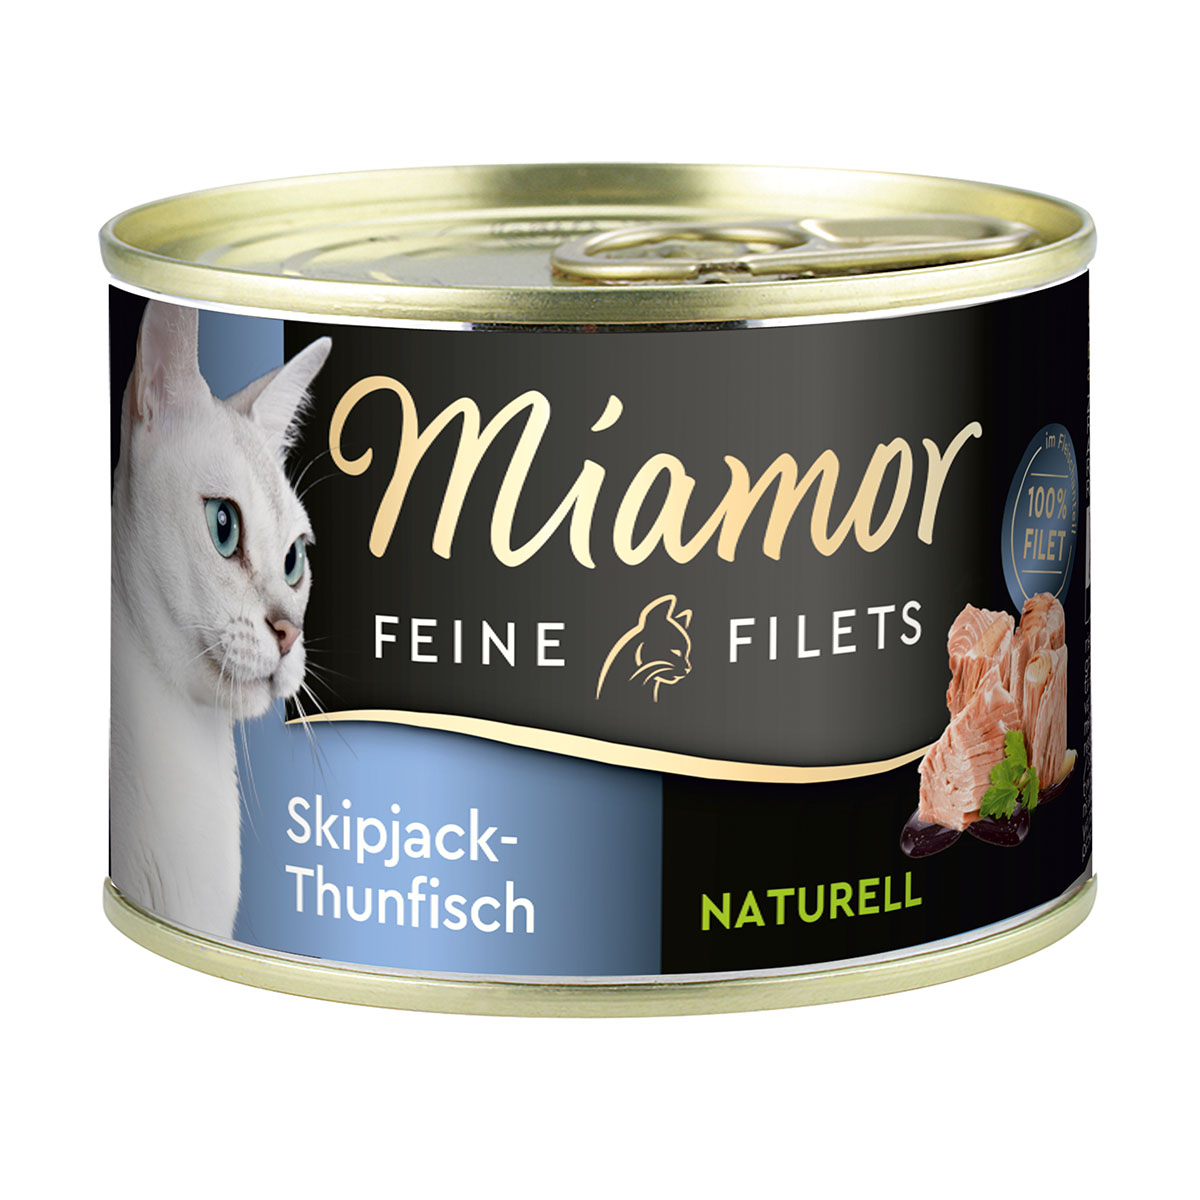 Miamor Feine Filets Naturelle, skipjack - tuňák, 156g plechovka